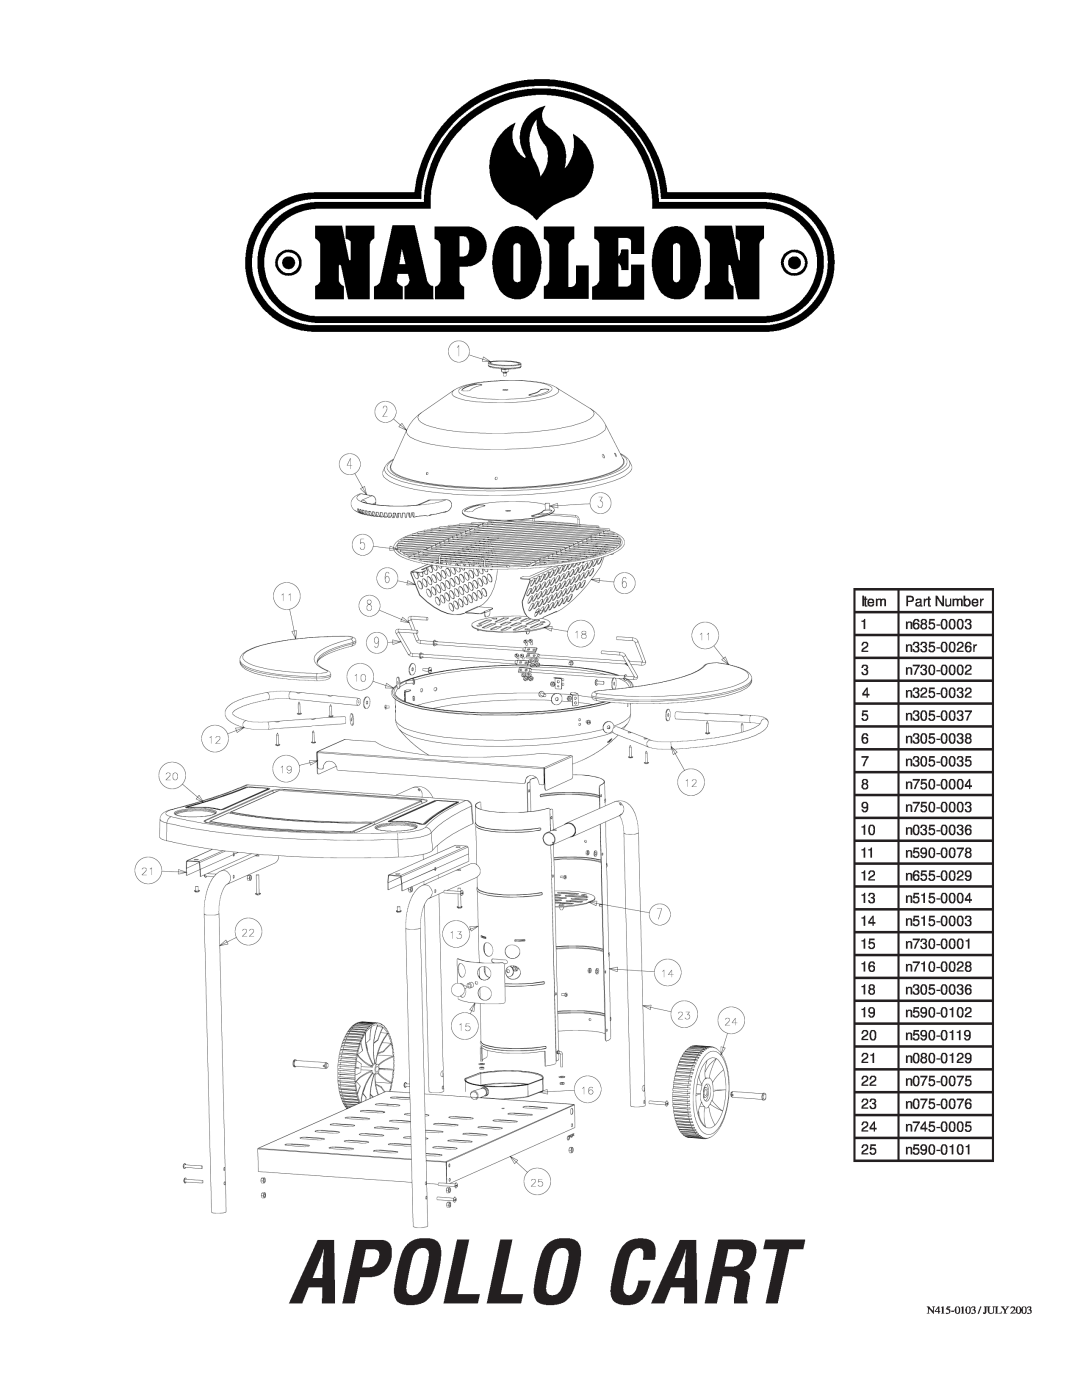 Napoleon Grills N415-0103 manual Apollo Cart 